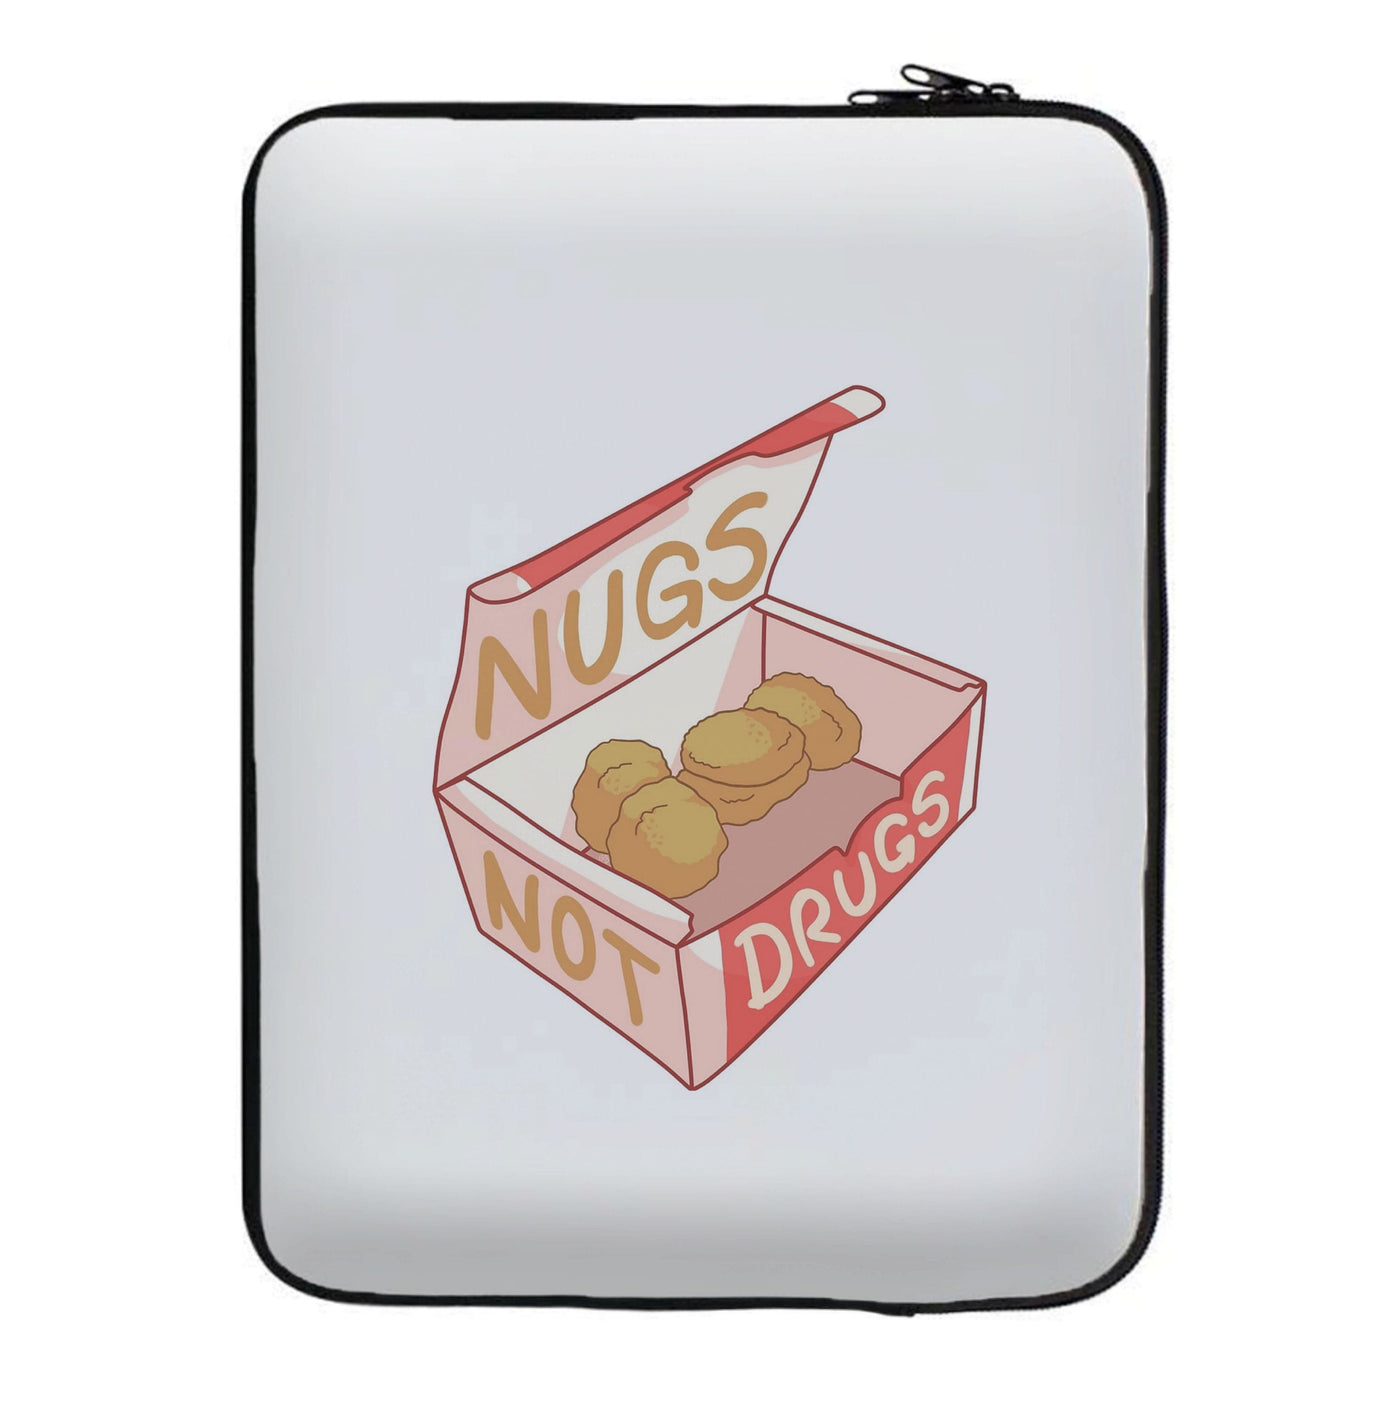 Nugs not Drugs Tumblr Style Laptop Sleeve